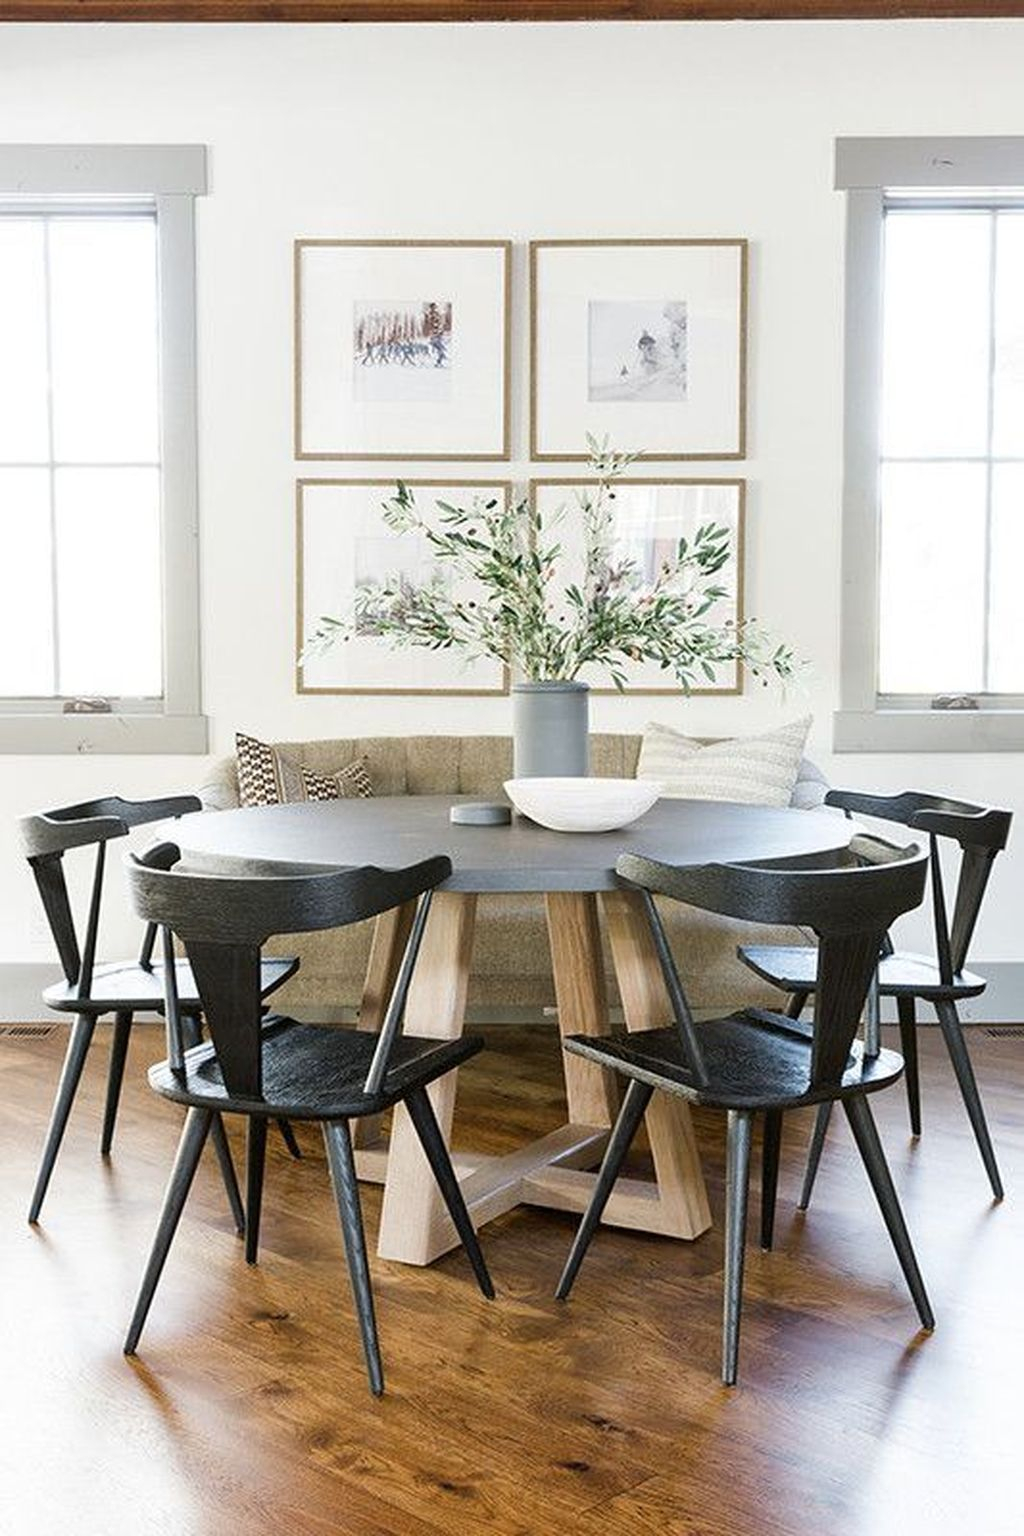 35 Awesome Small Dining Room Table Decor Ideas To Copy Asap | DECORKEUN